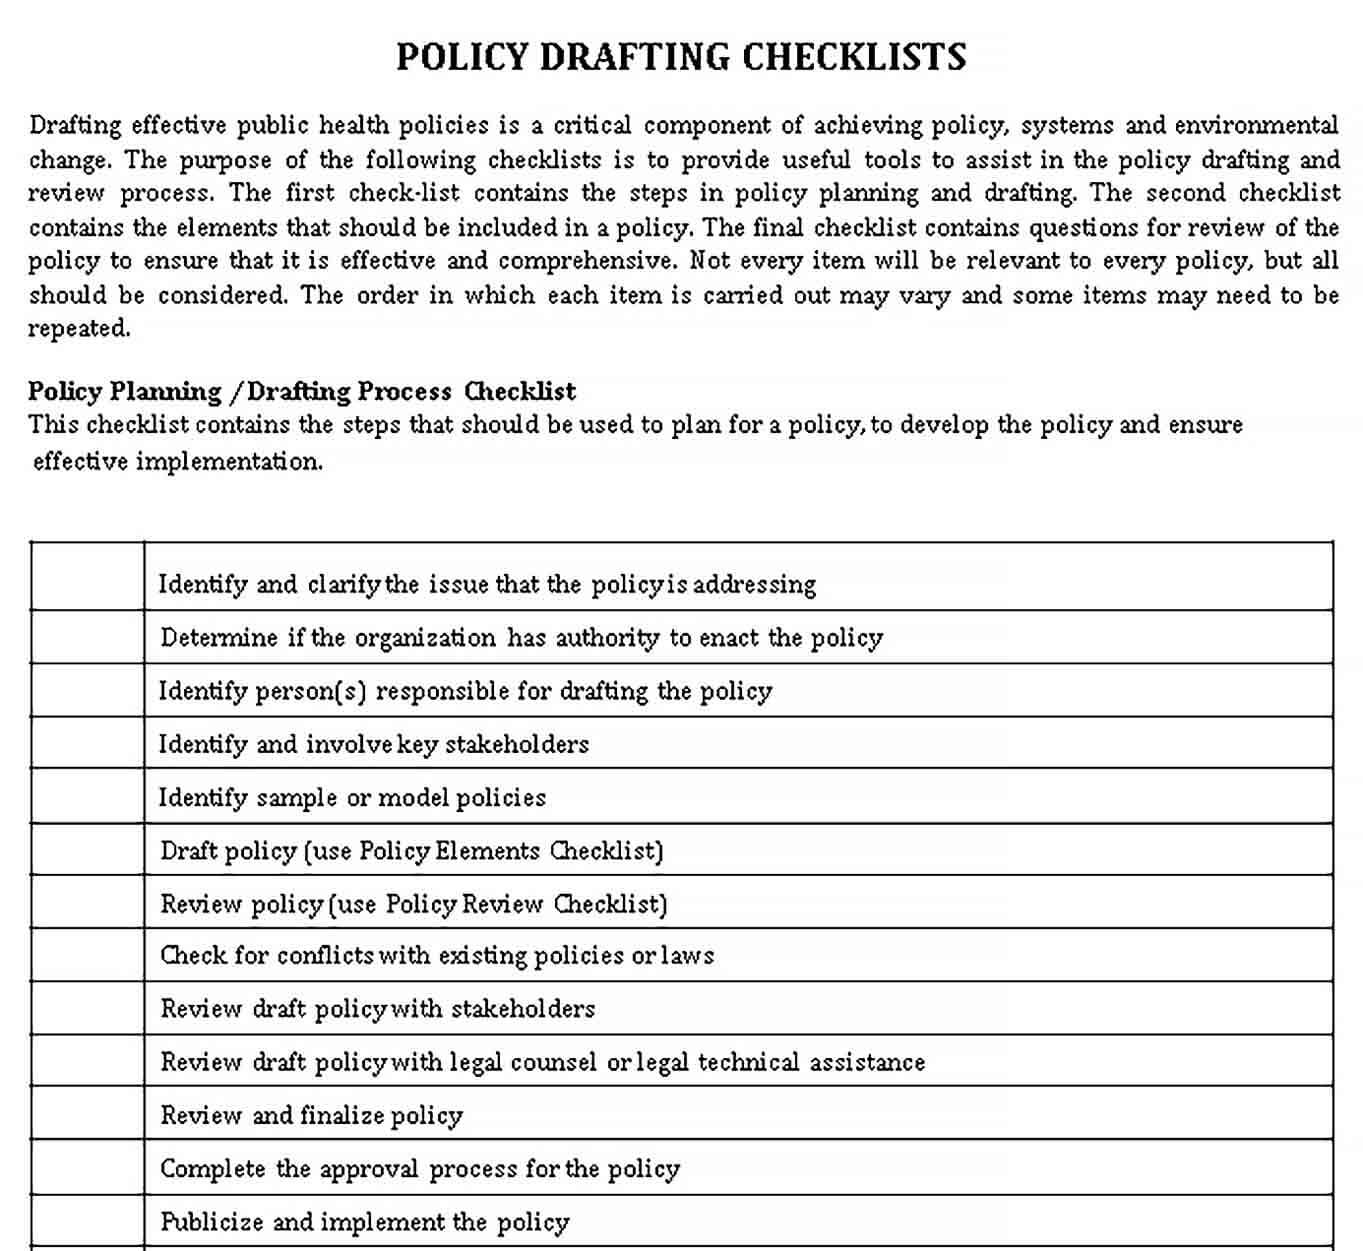 Sample Policy Drafting Checklist